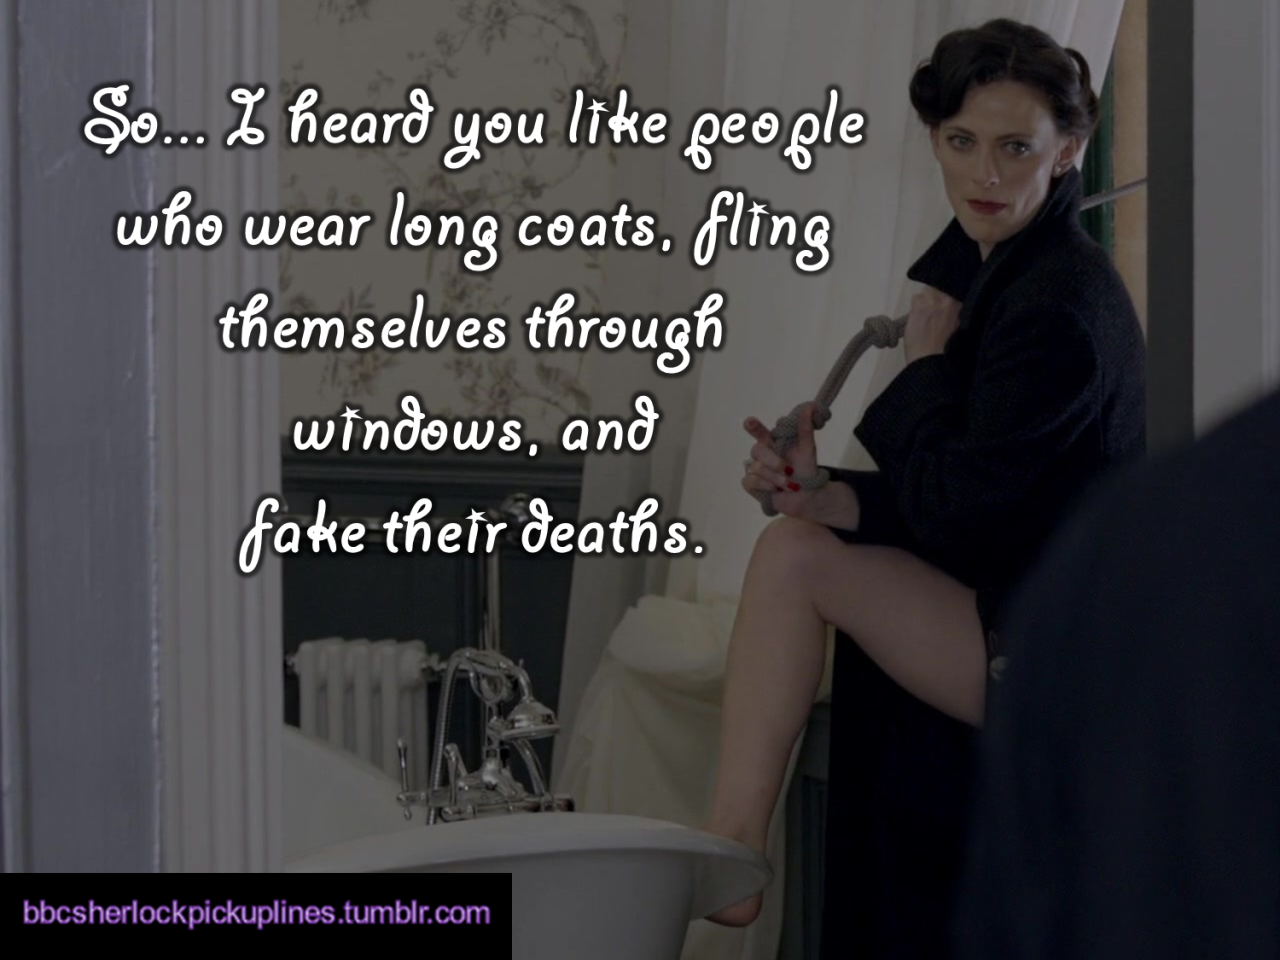 &ldquo;So&hellip; I heard you like people who wear long coats, fling themselves